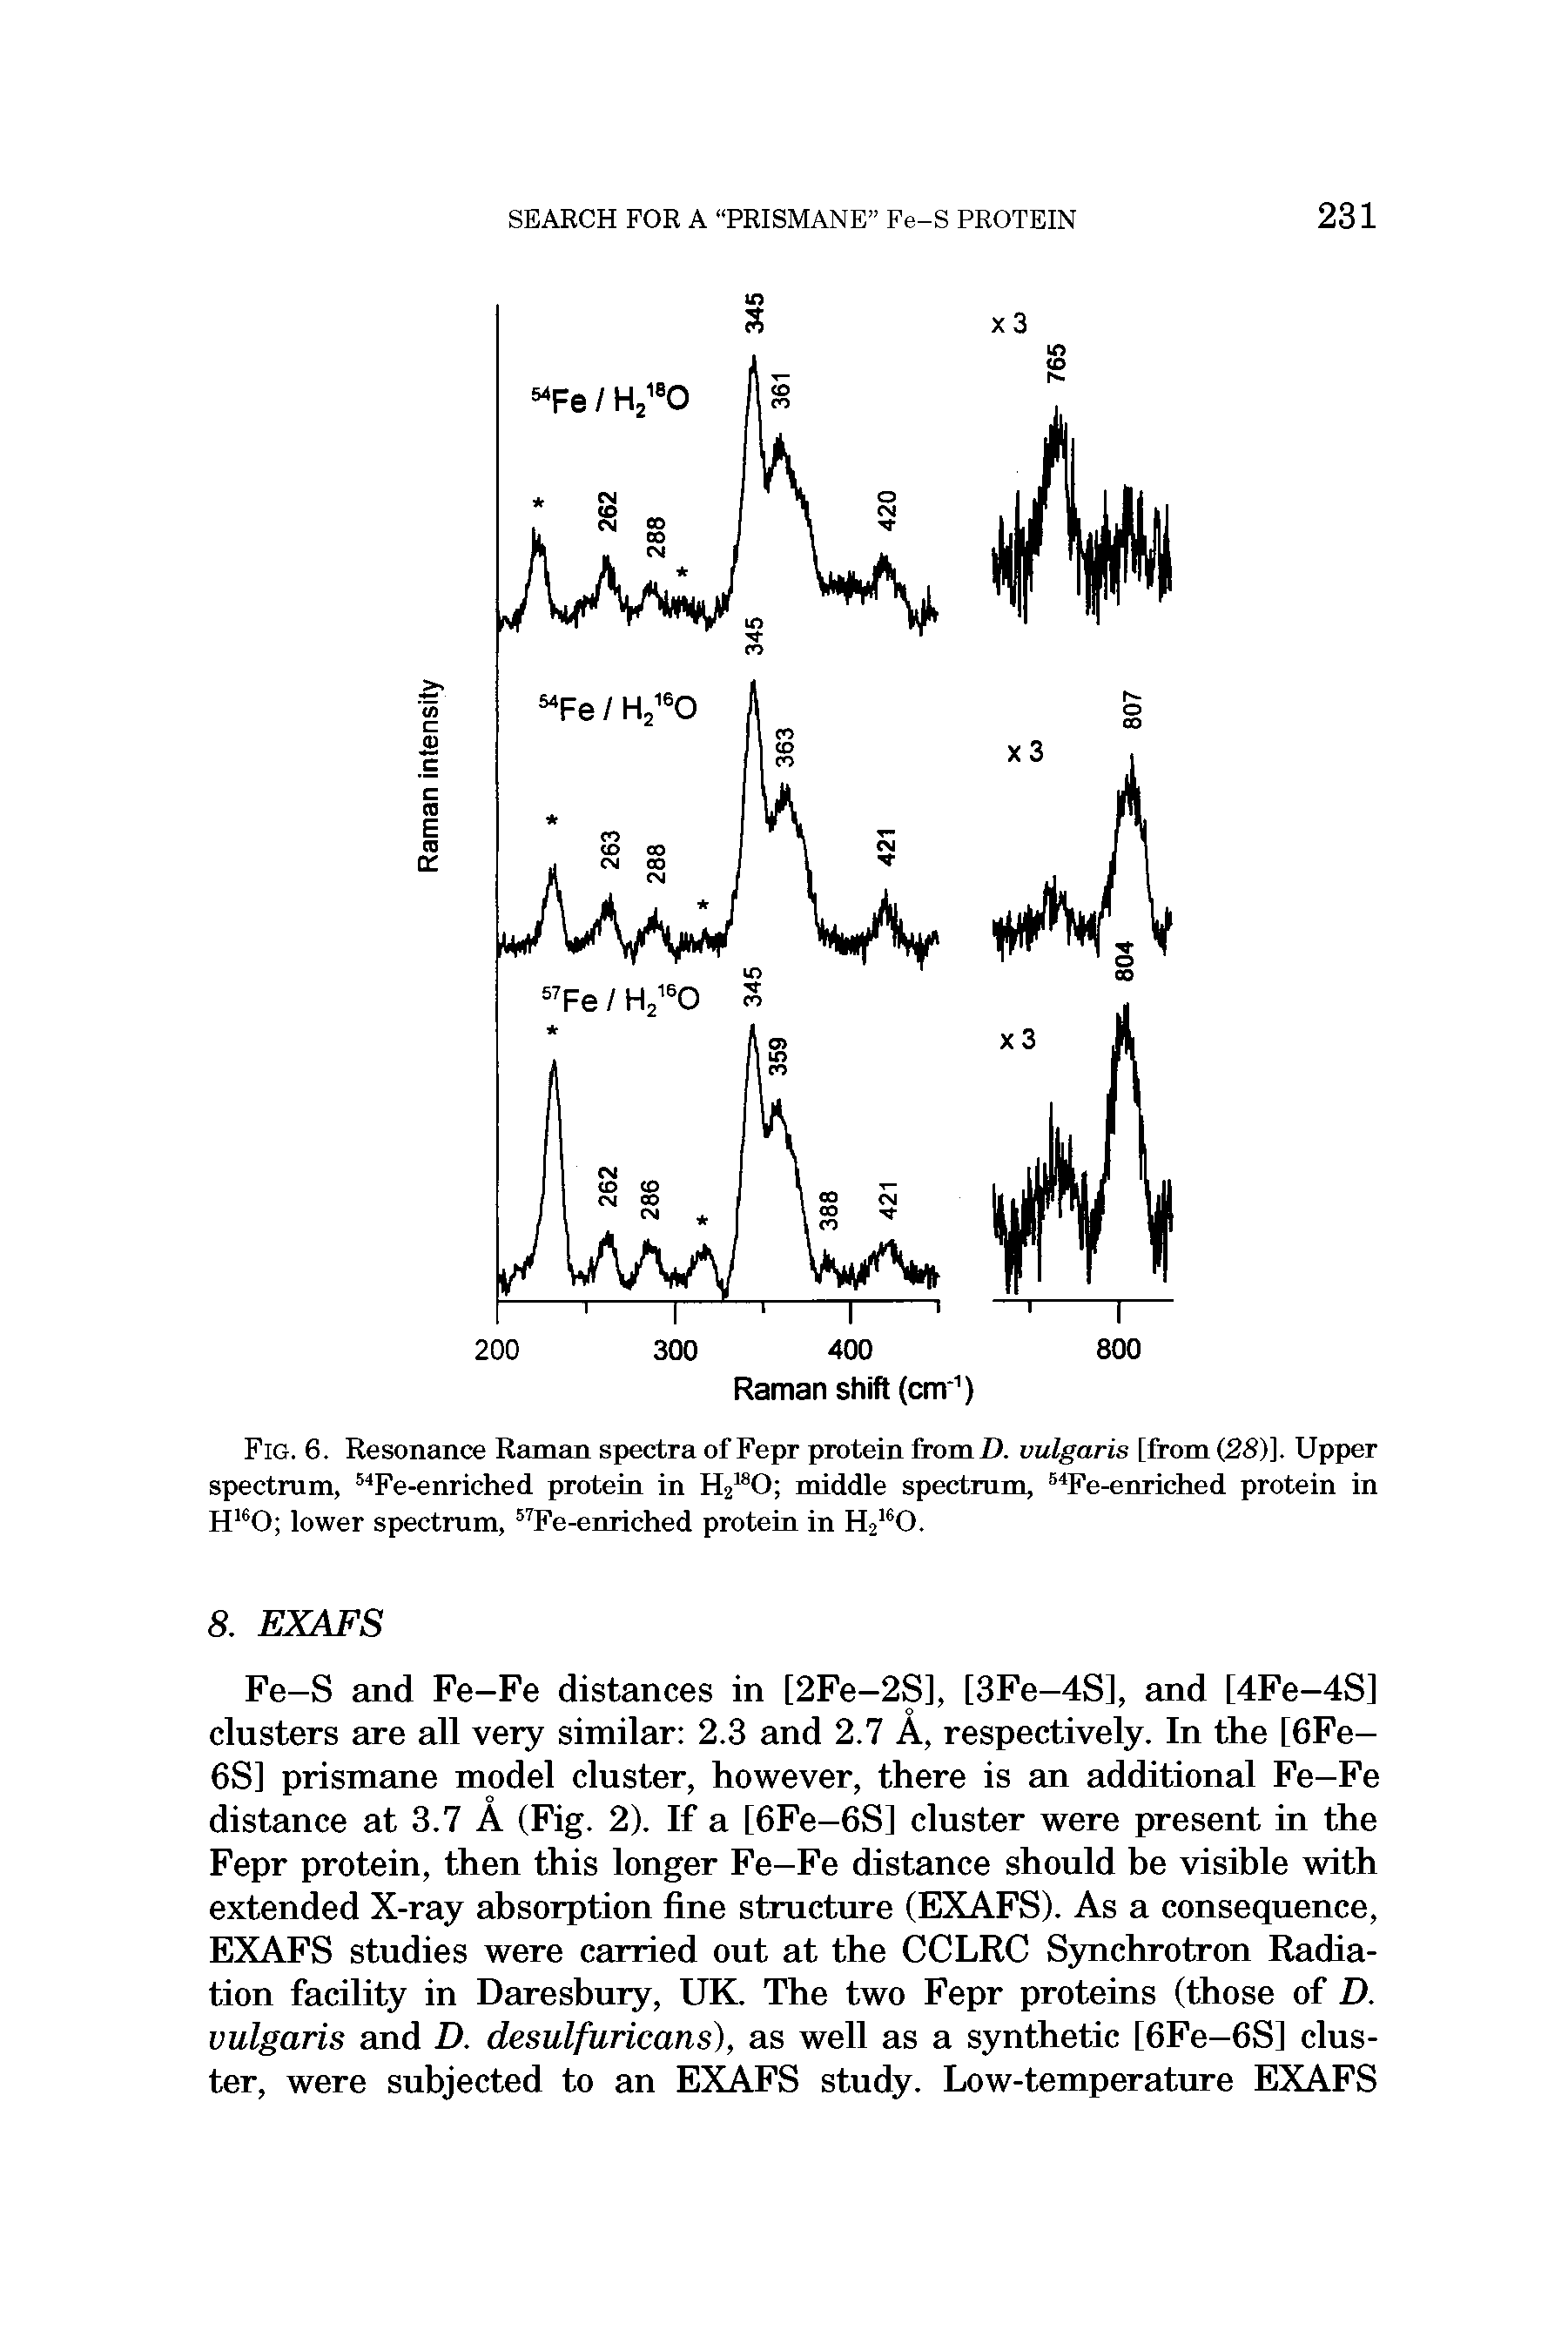 Fig. 6. Resonance REimEin spectra of Fepr protein fromZ). vulgaris [from (28)]. Upper spectrum, Fe-enriched protein in H2 0 middle spectrum, Fe-enriched protein in H" lower spectrum, Te-enriched protein in H2" 0.